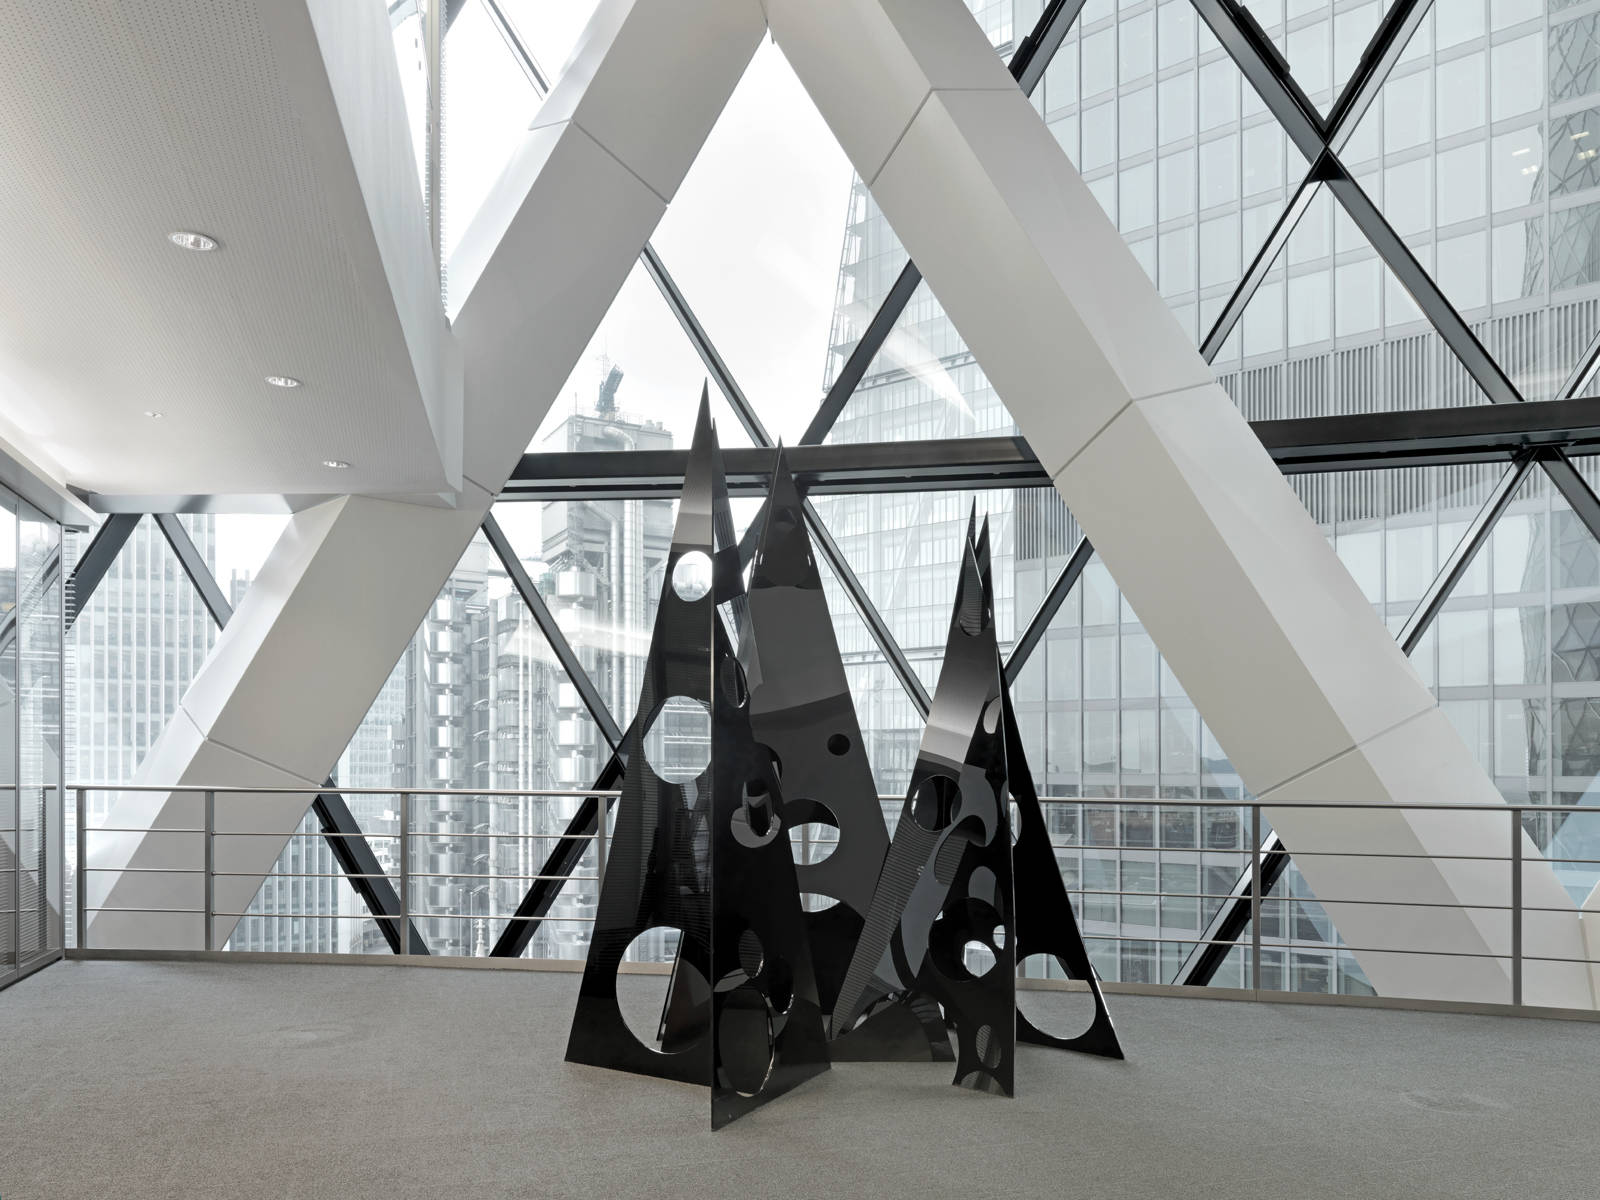 Eva Rothschild / Art at Swiss Re, installation view, London / 2014